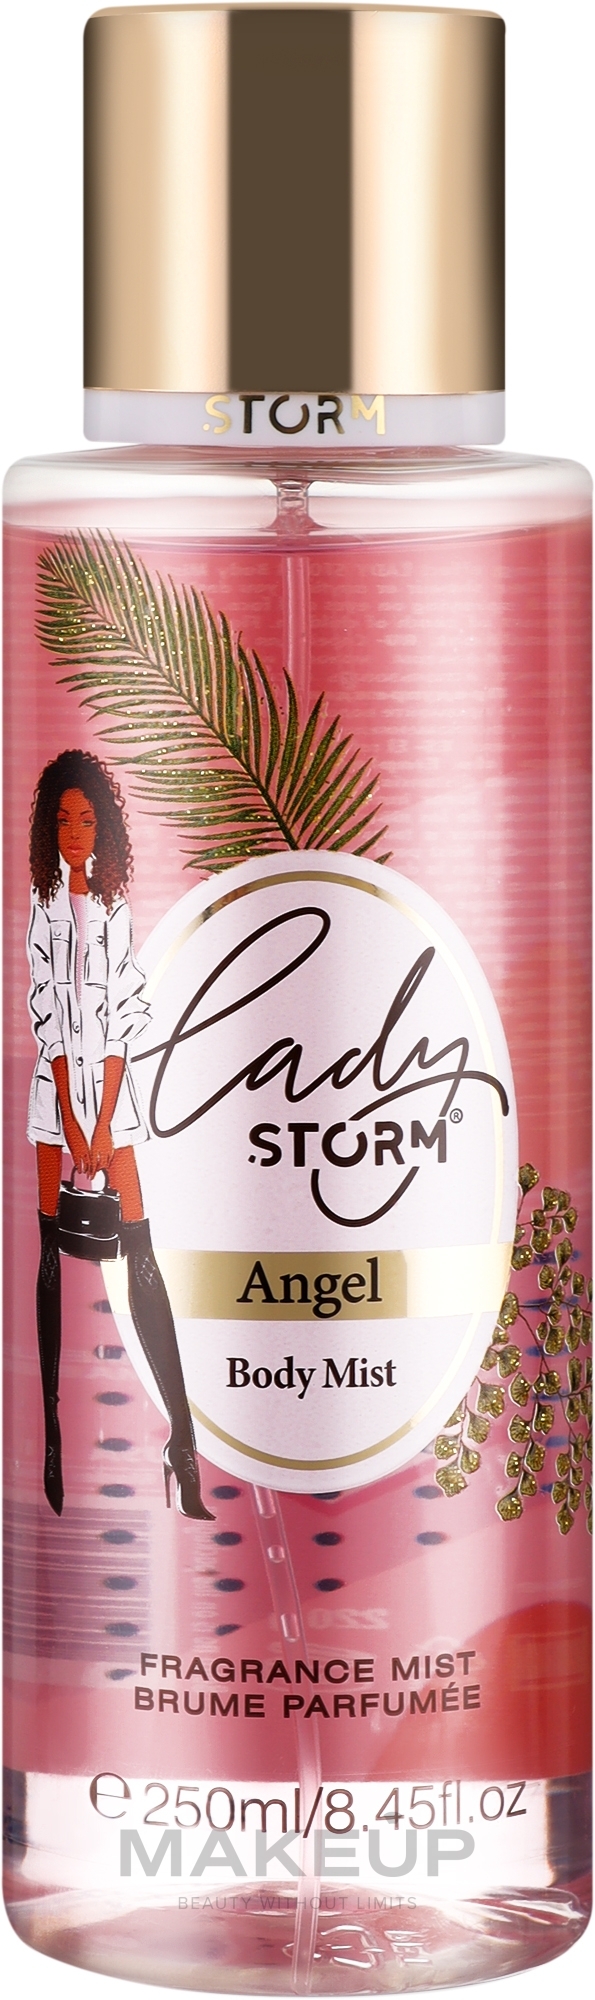 Storm Angel - Парфюмированный спрей для тела — фото 250ml